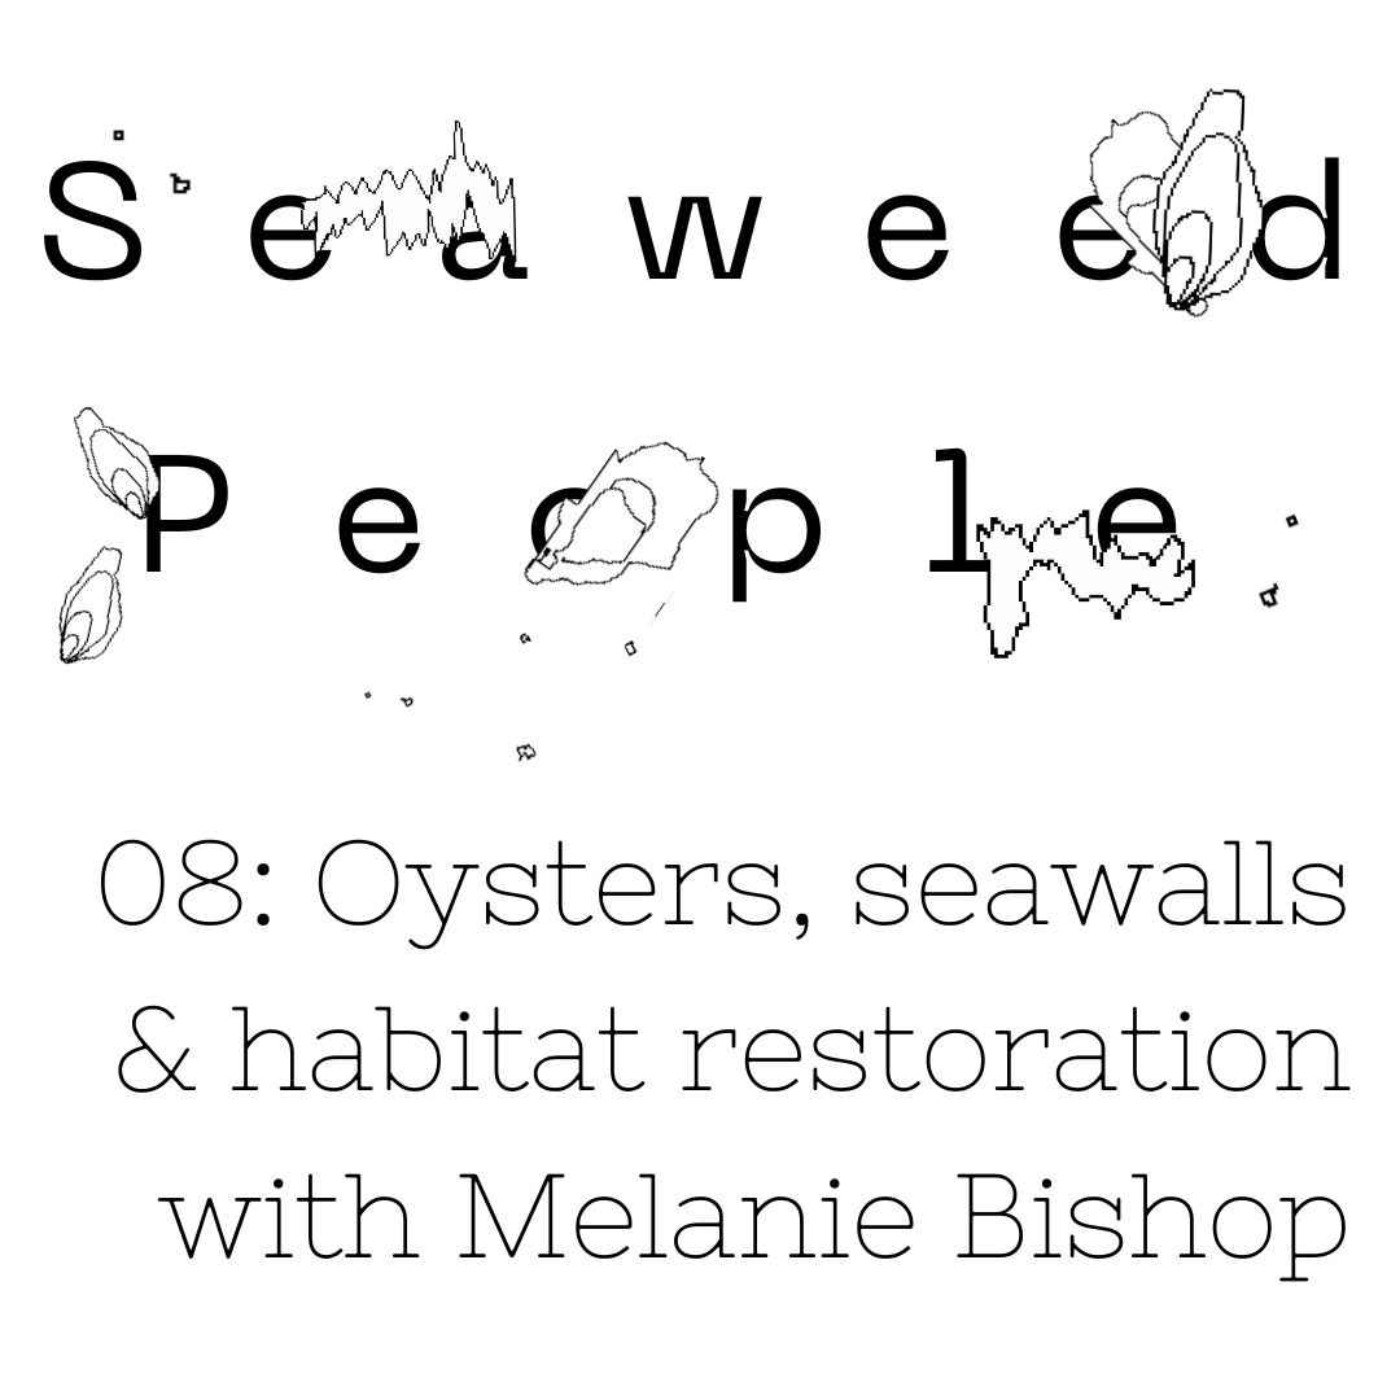 Oysters, seawalls & habitat restoration with Melanie Bishop